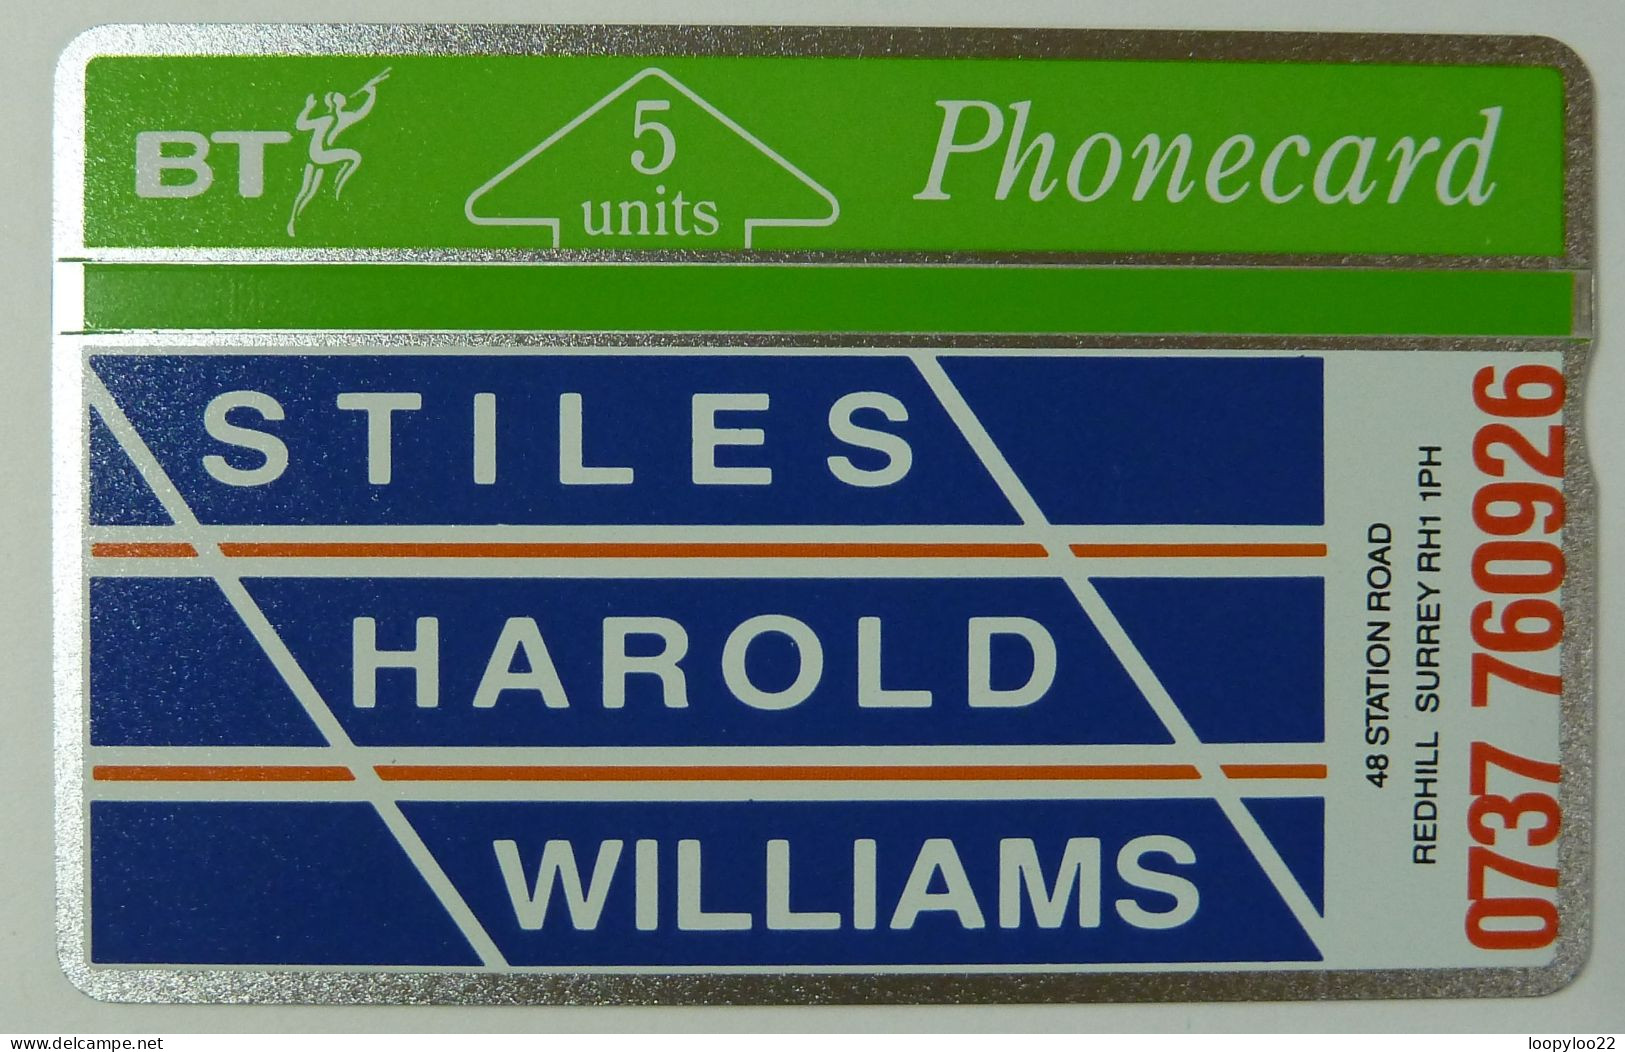 UK - Great Britain - Landis & Gyr - BTP031 - Stiles Harold Williams - Redhill Surrey - 130K - Mint - BT Promotional